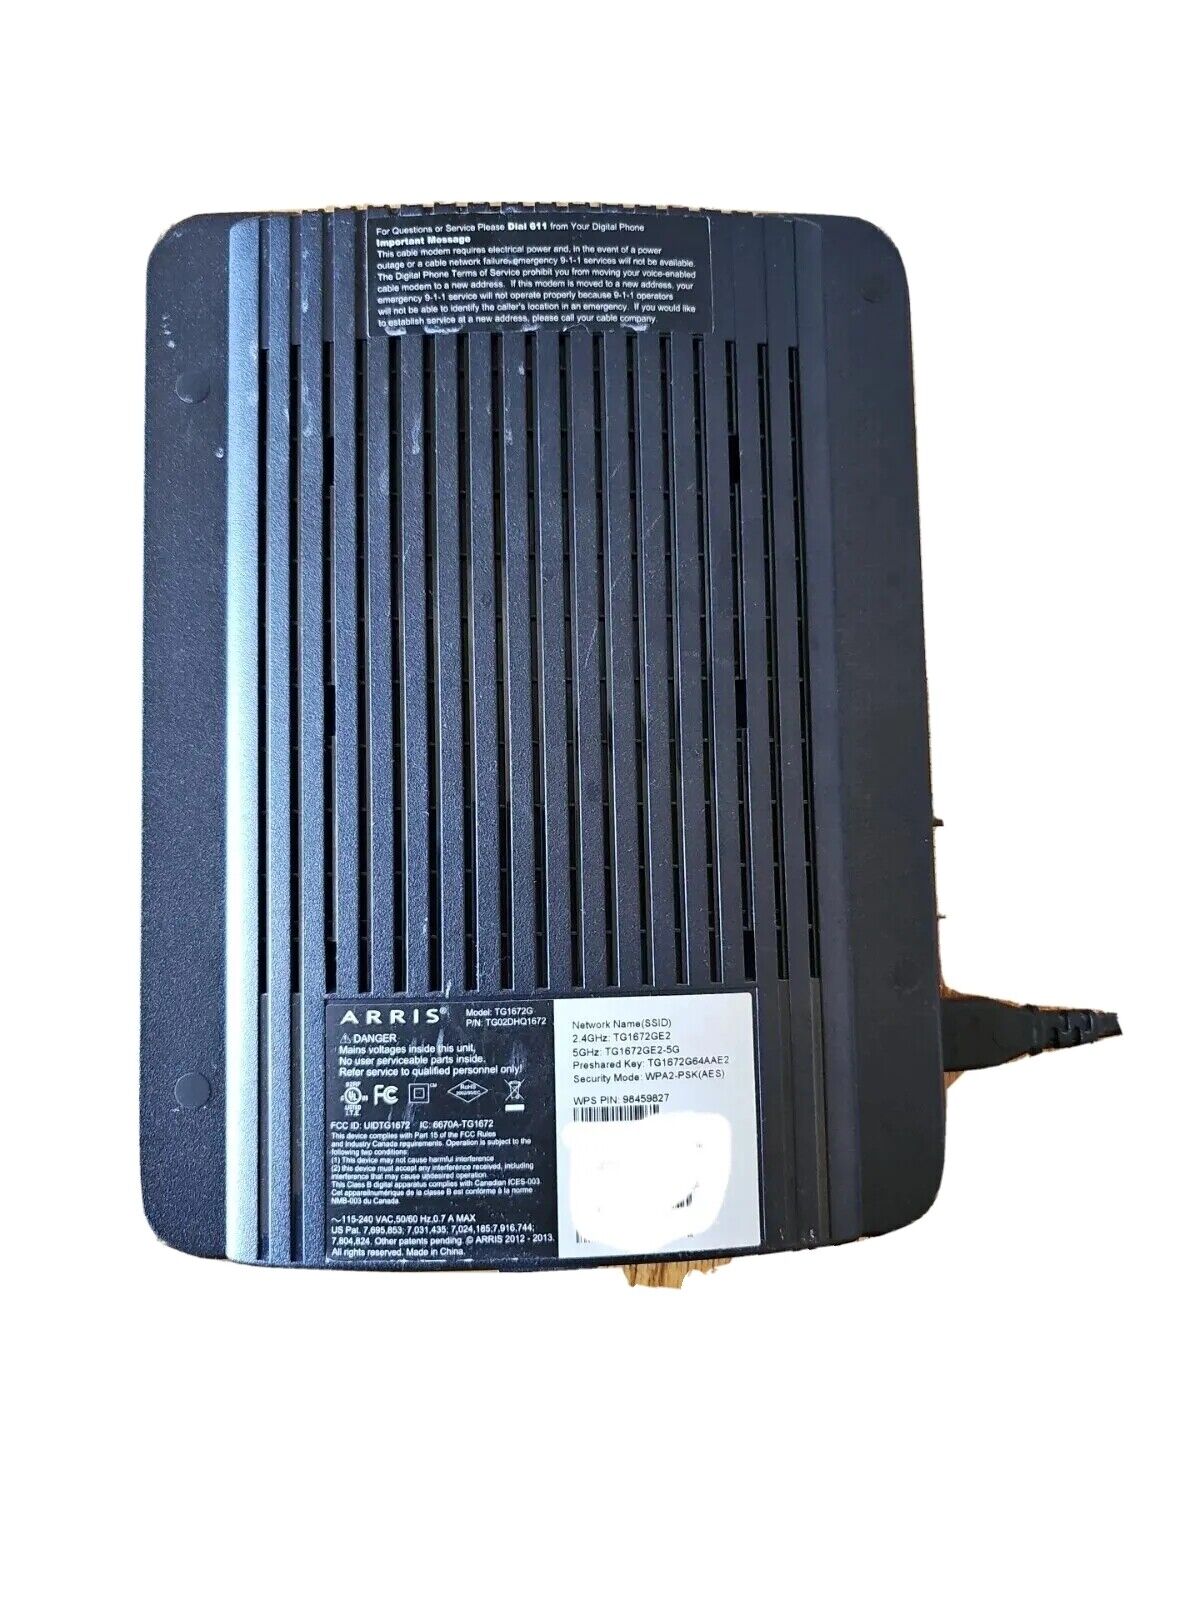 For Parts  Arris DG1670A Dual Band Data Wireless Modem Router Docsis 3.0 4-Port